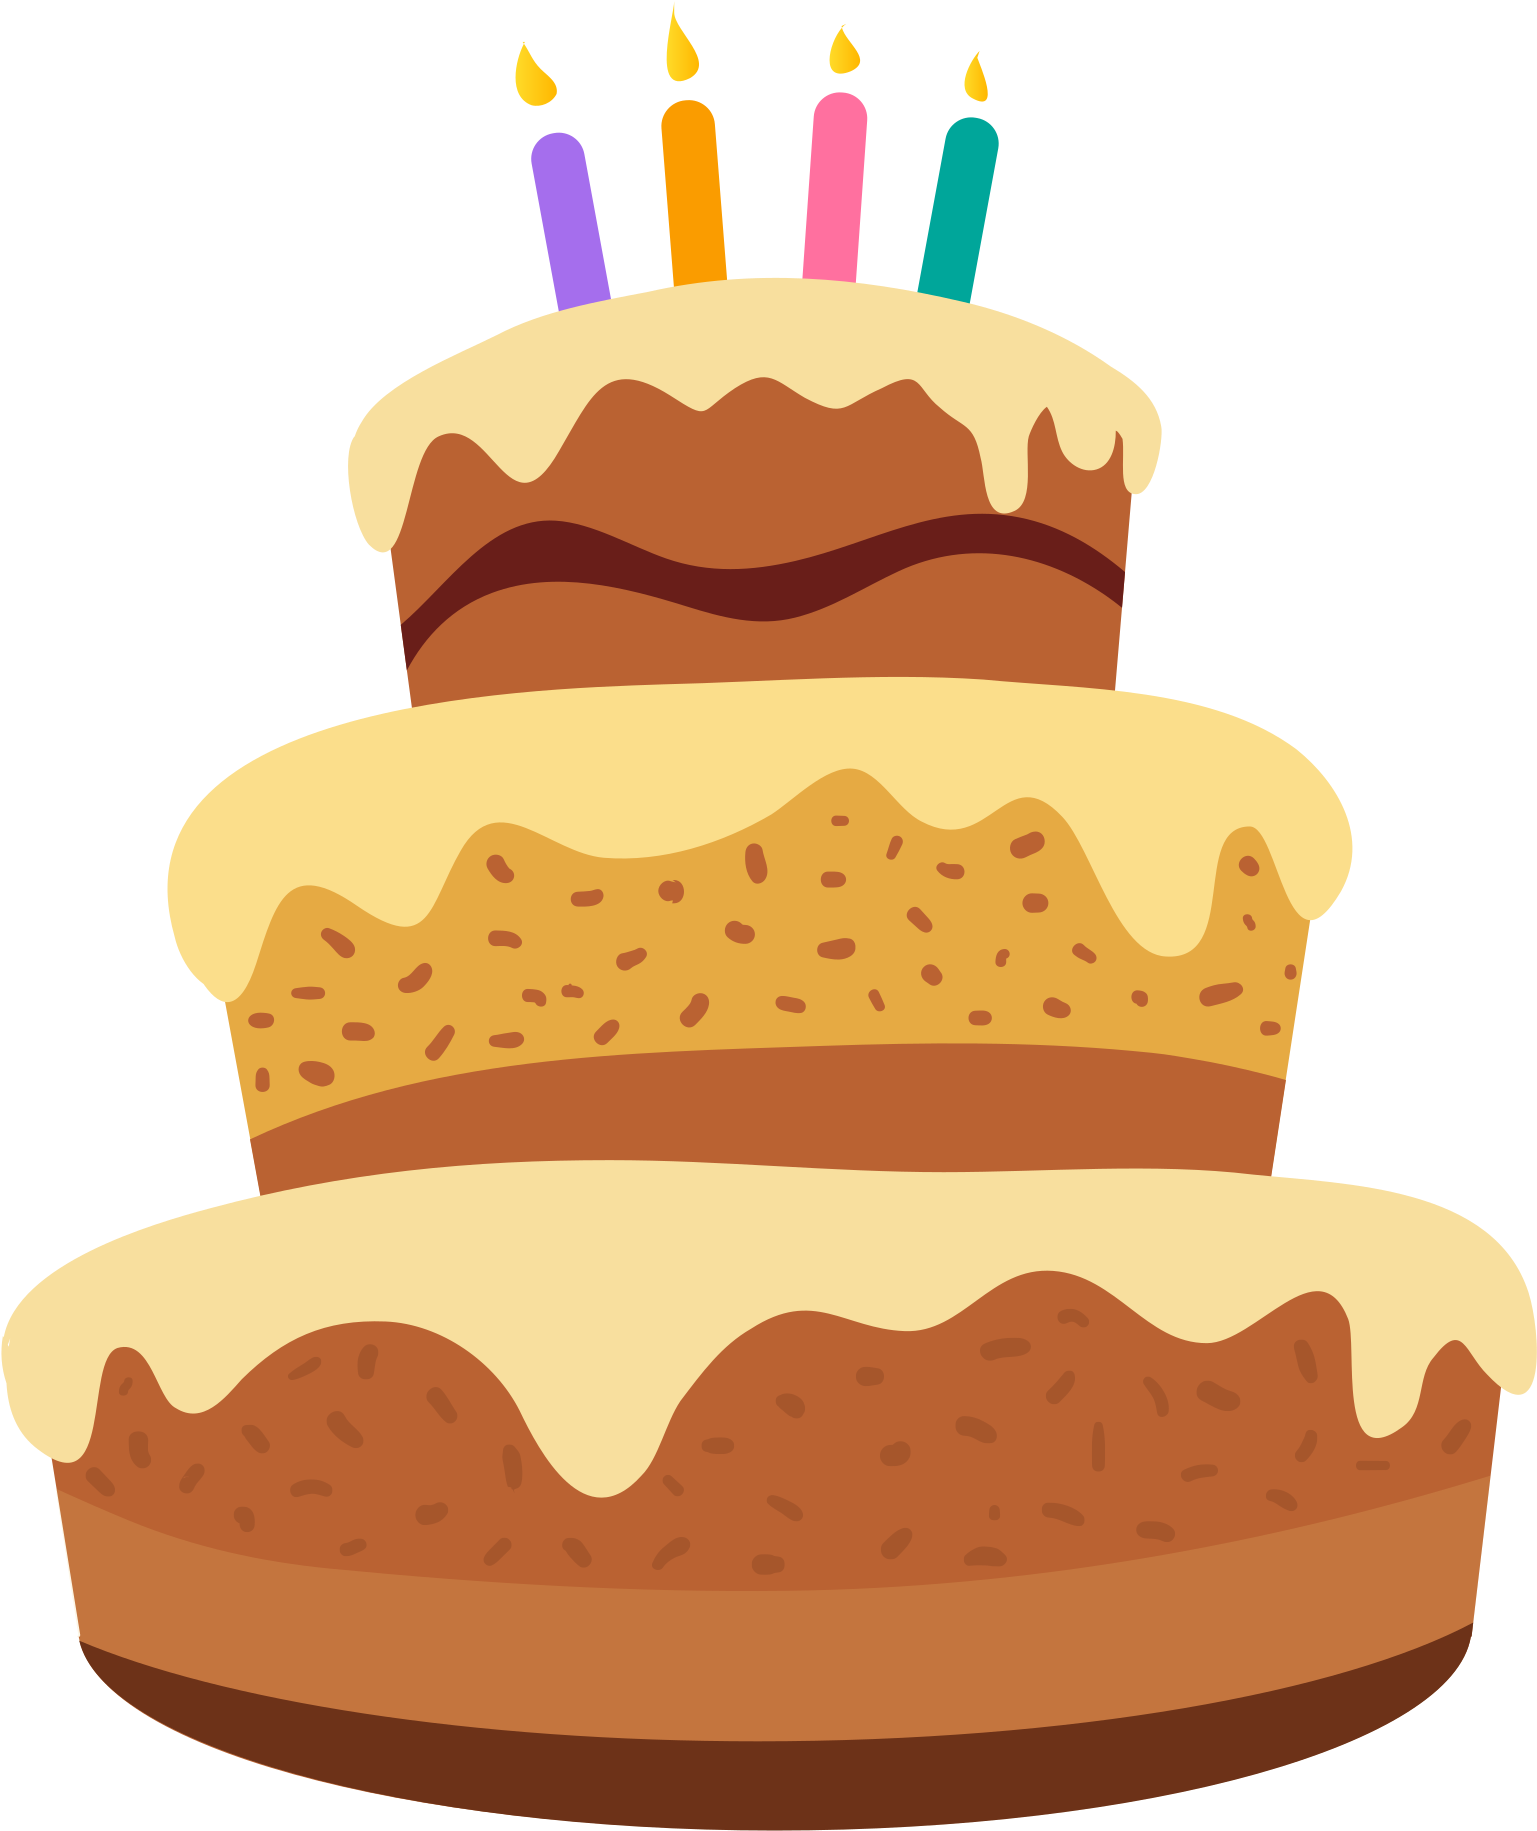 Download Cake Birthday PNG Free Photo HQ PNG Image | FreePNGImg